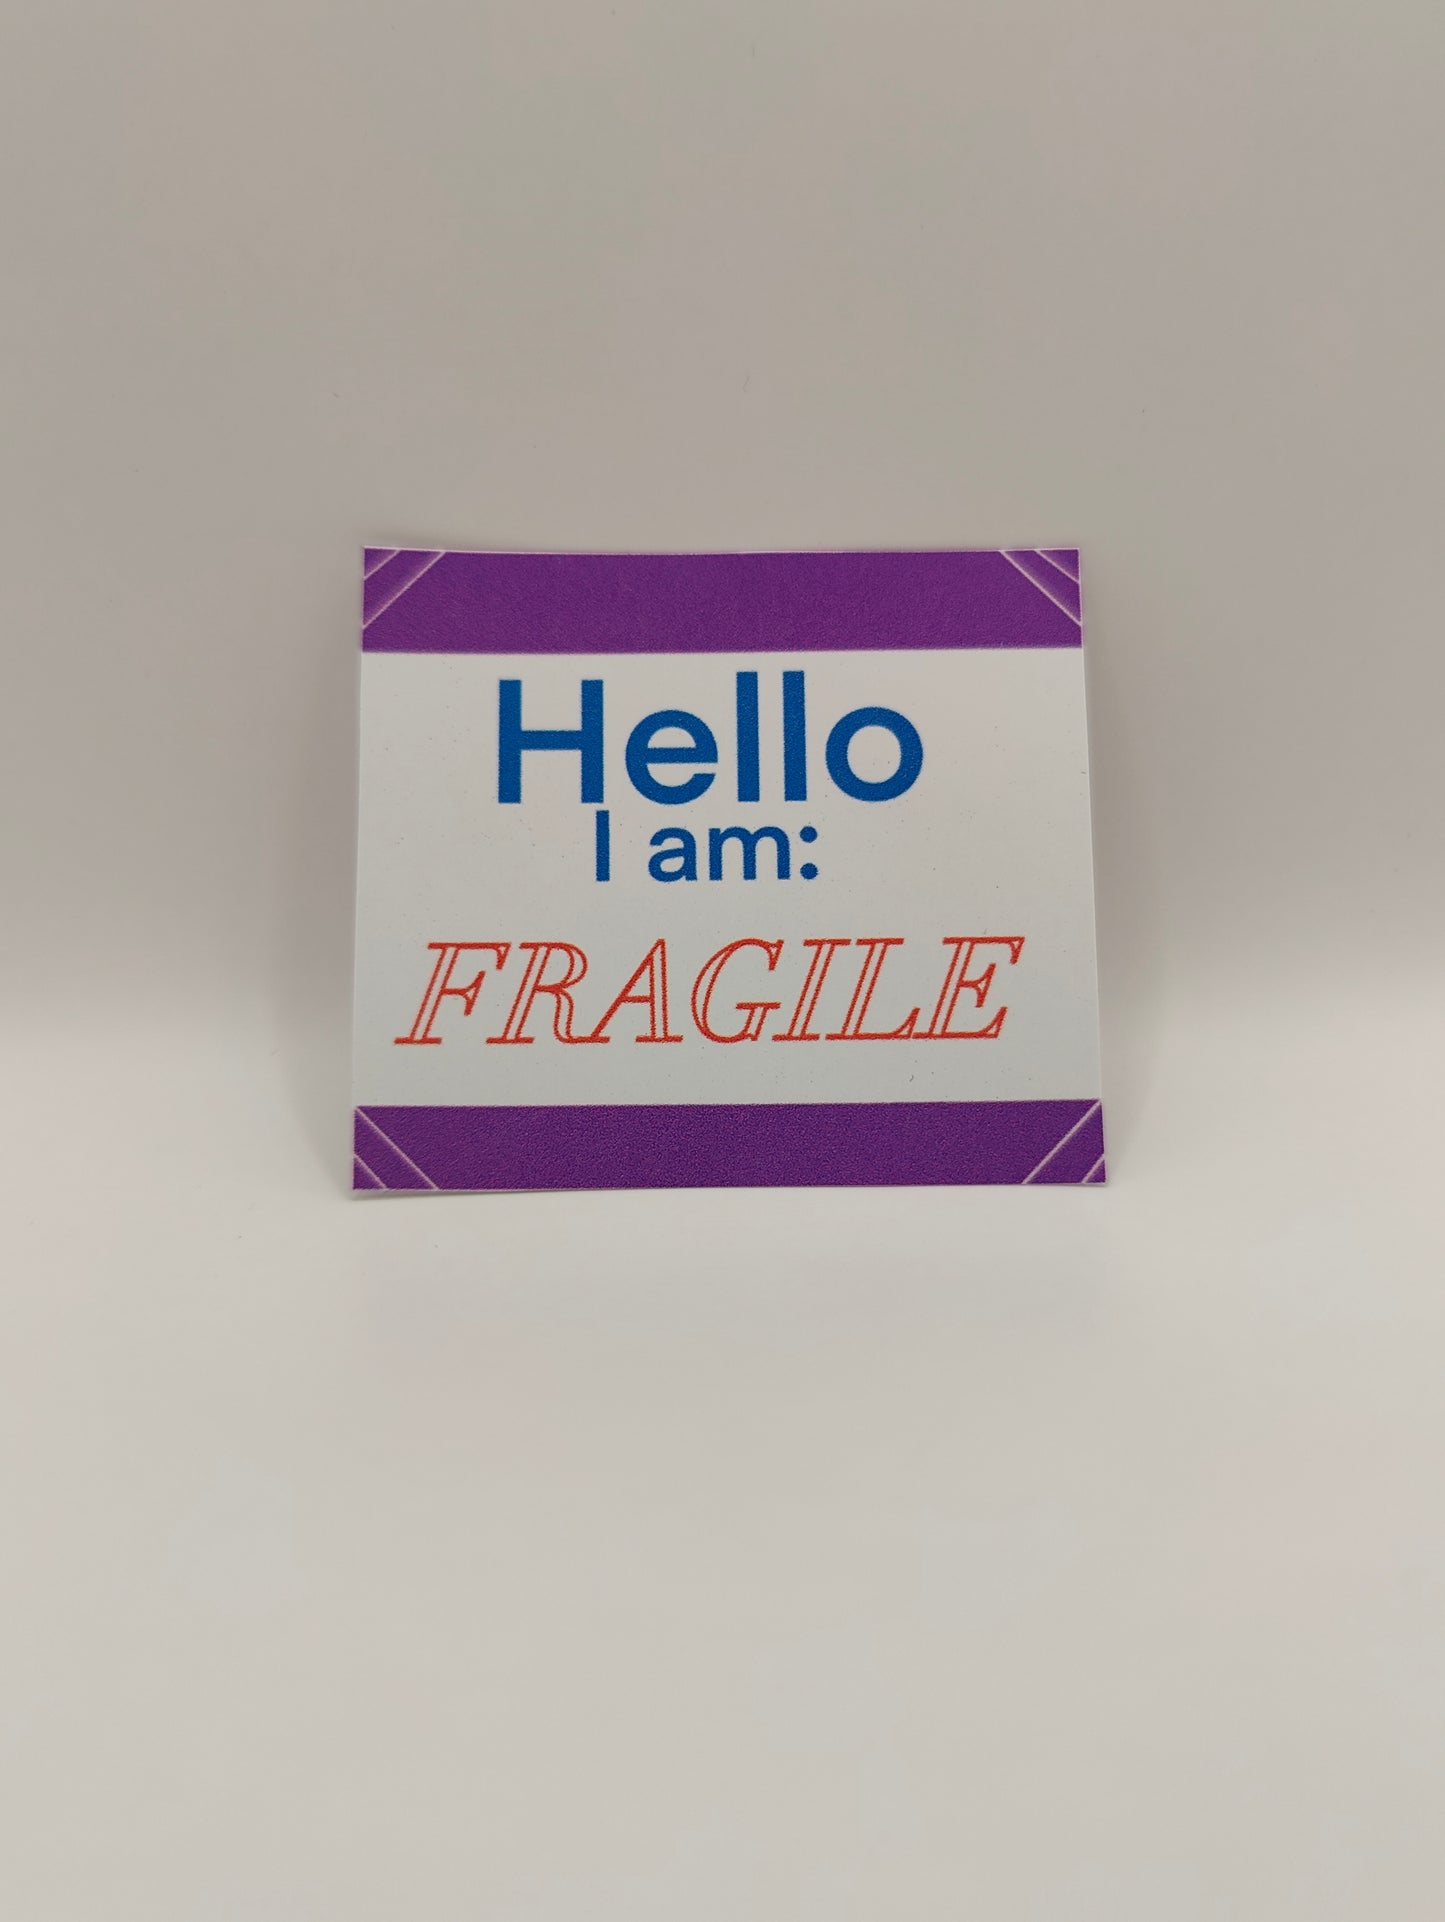 Hello i am: Fragile sticker